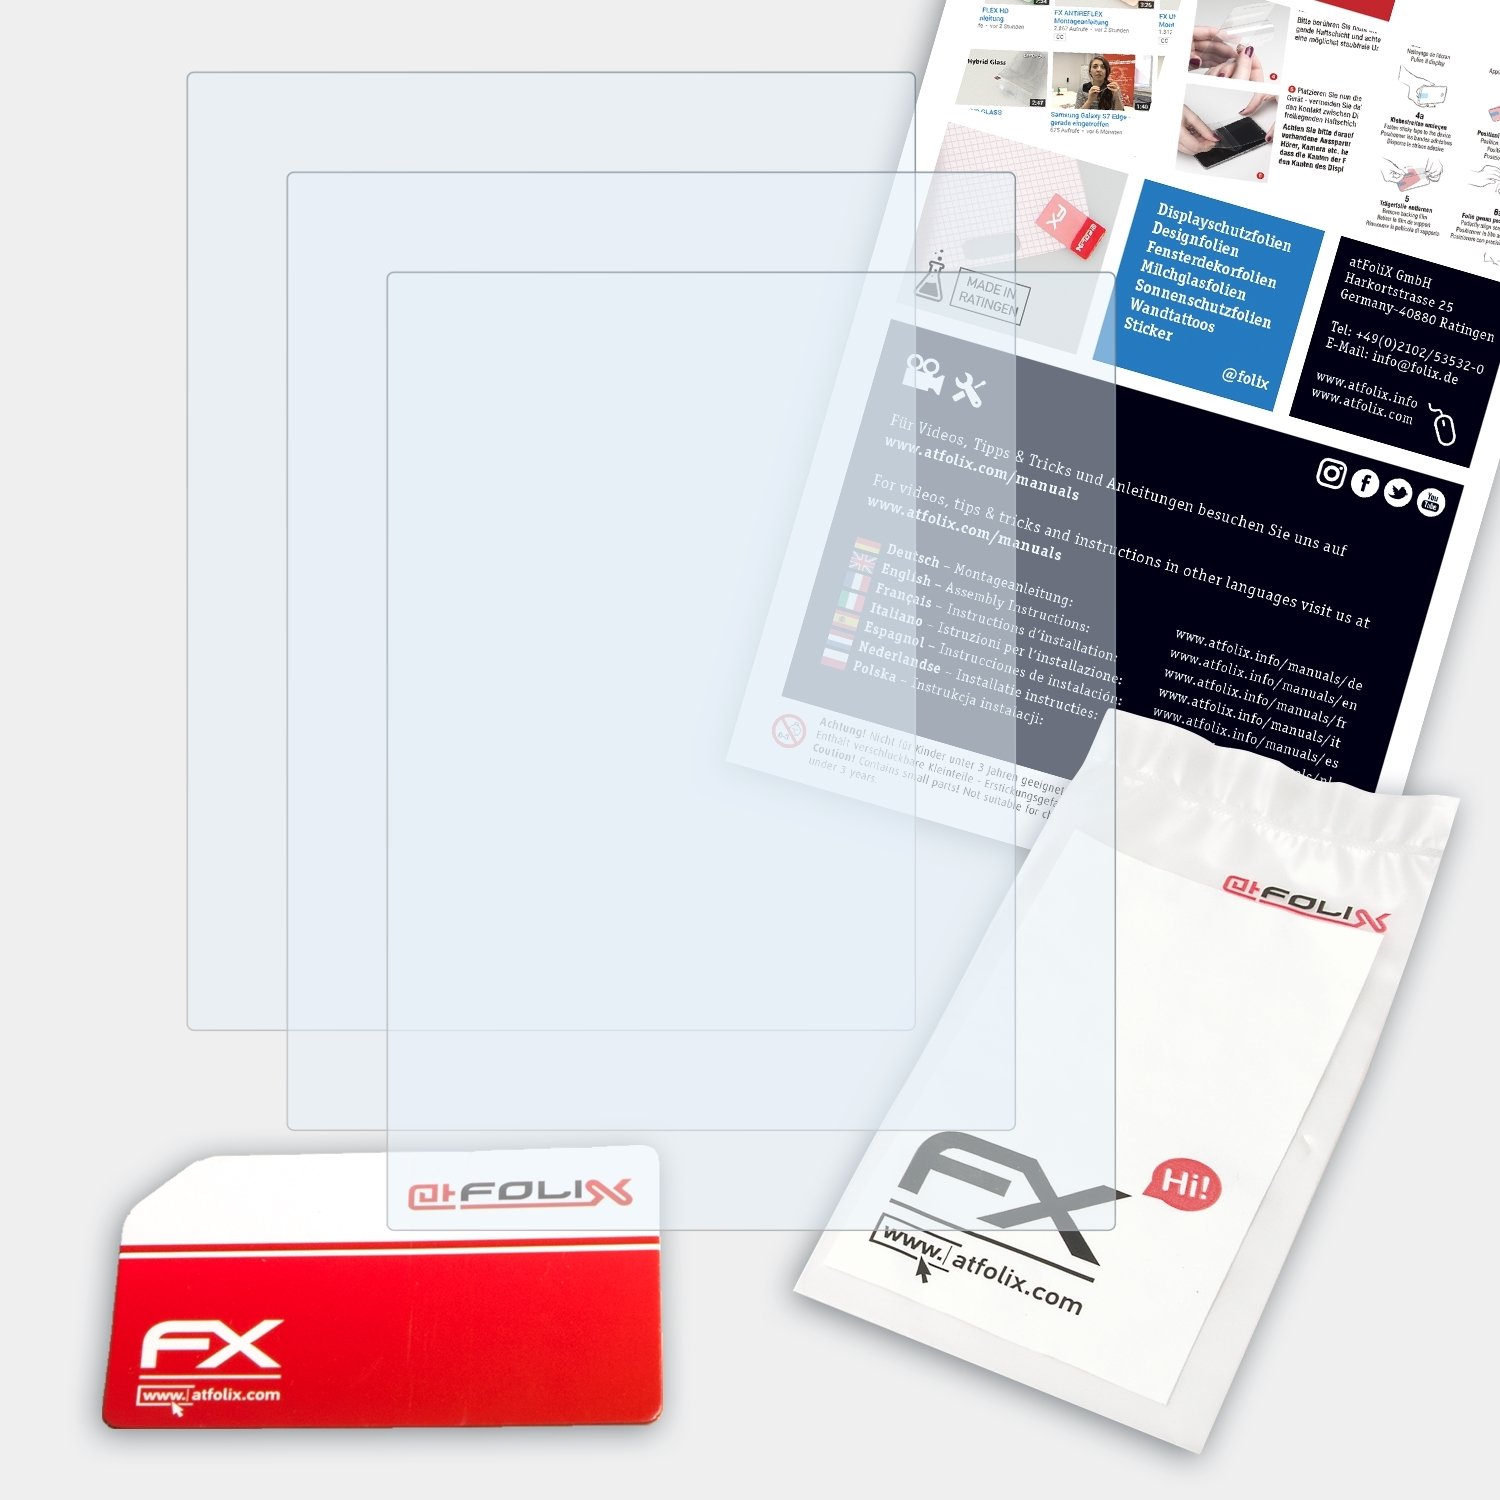 ATFOLIX 3x FX-Clear Displayschutz(für Falk 30 IBEX Cross)